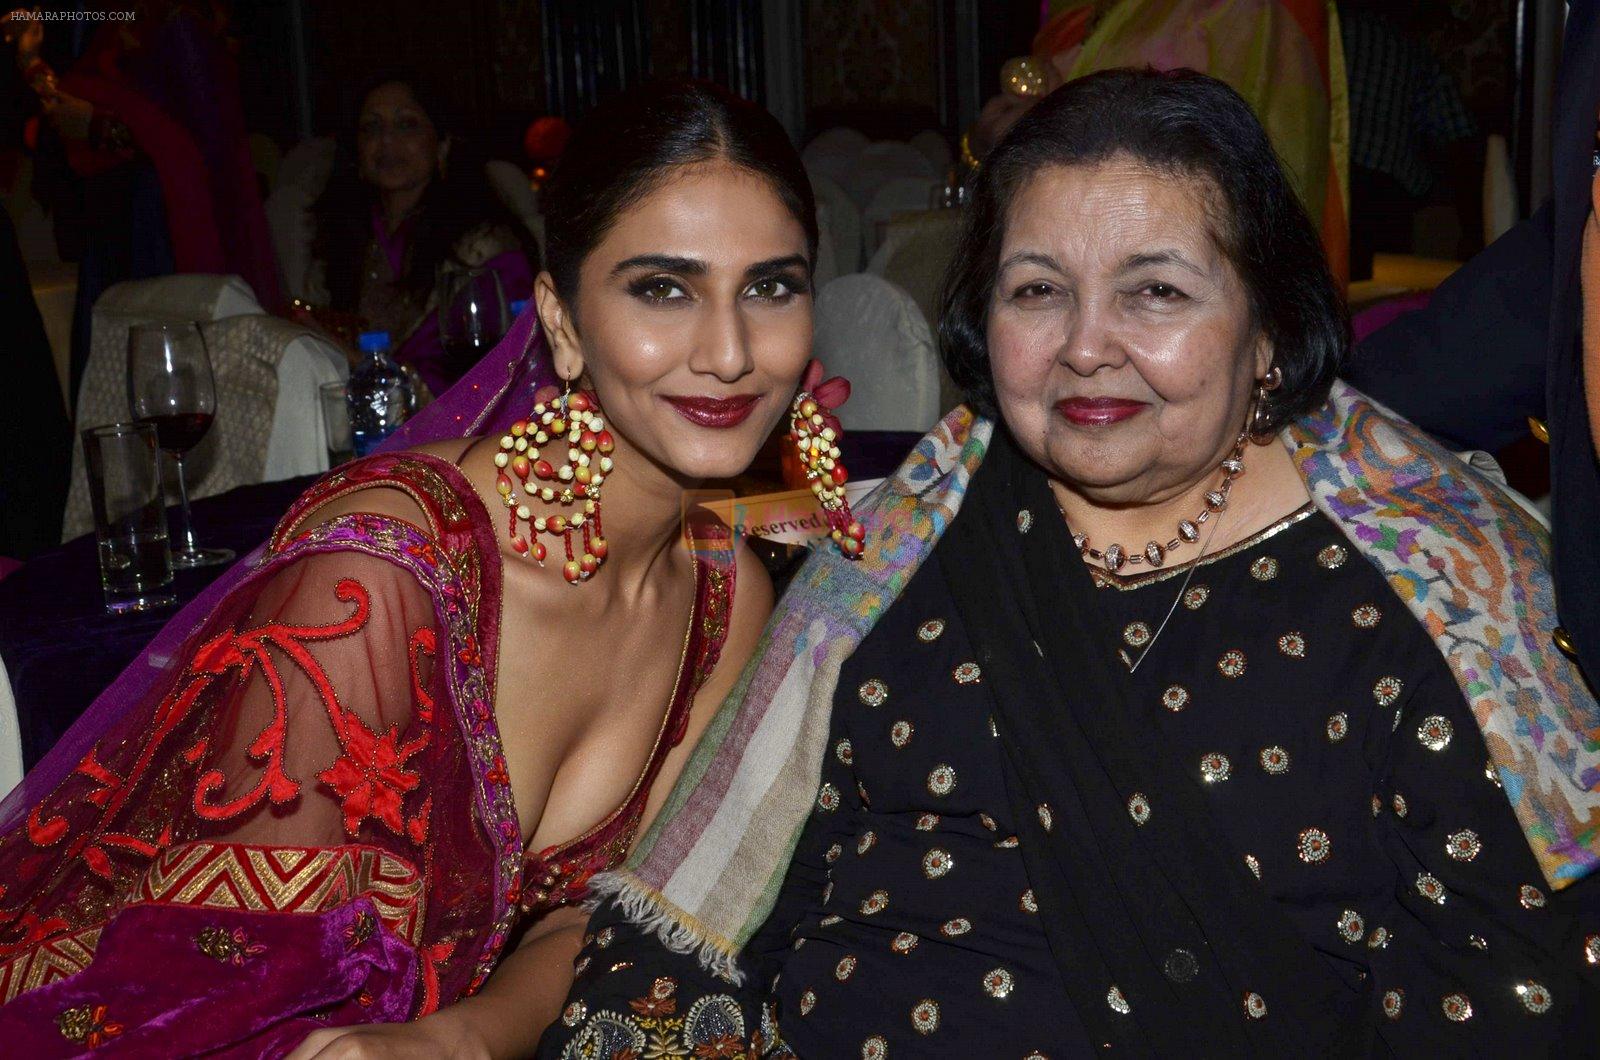 Vaani Kapoor at Royal Fable show in Taj Hotel, Mumbai on 6th Nov 2014